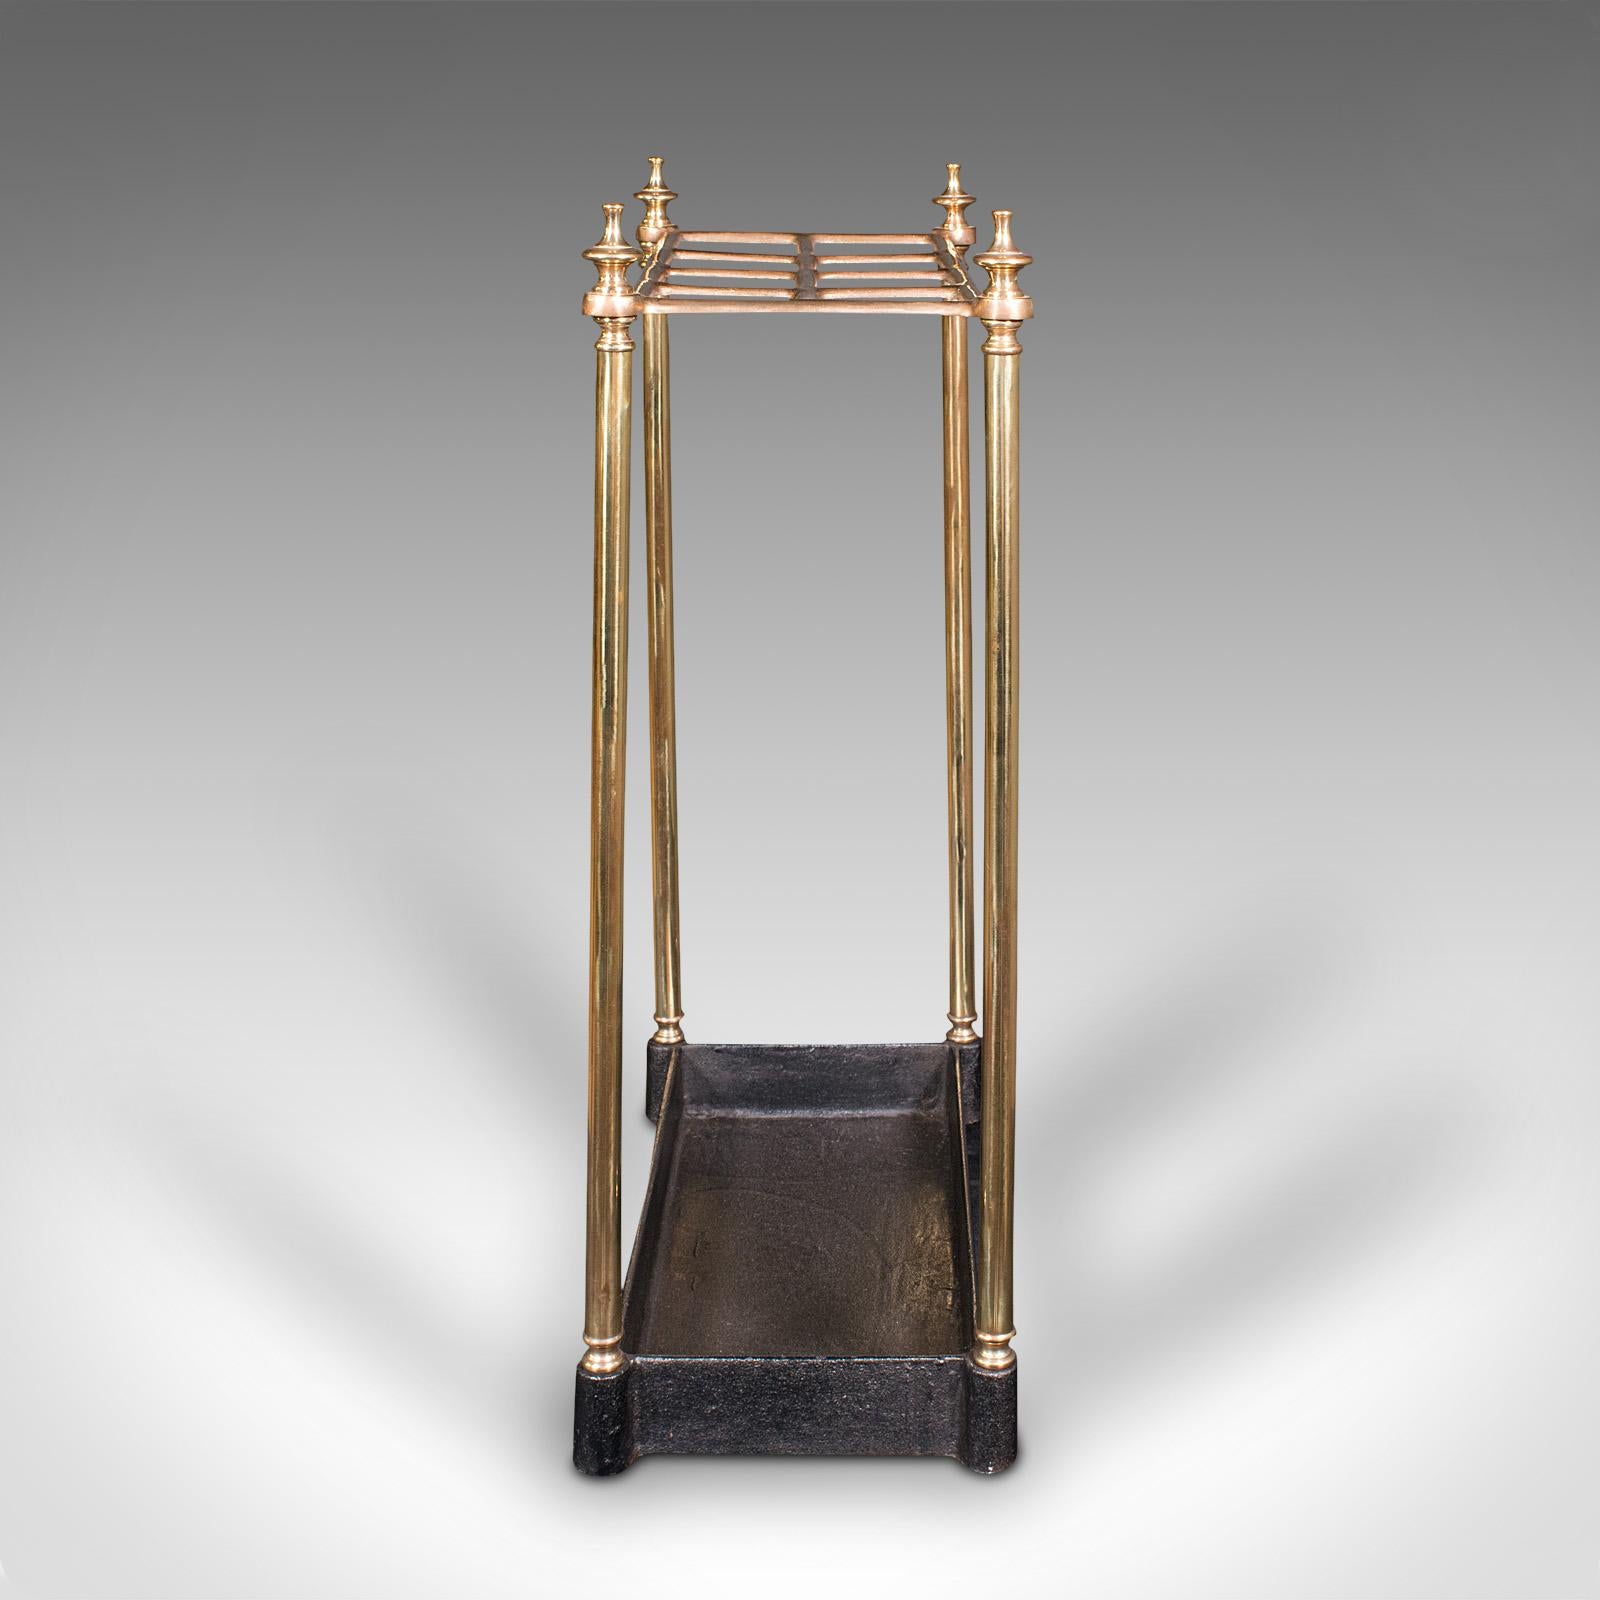 European Antique Segmented Stick Stand, English, Brass, Hallway Rack, Victorian c. 1900 For Sale